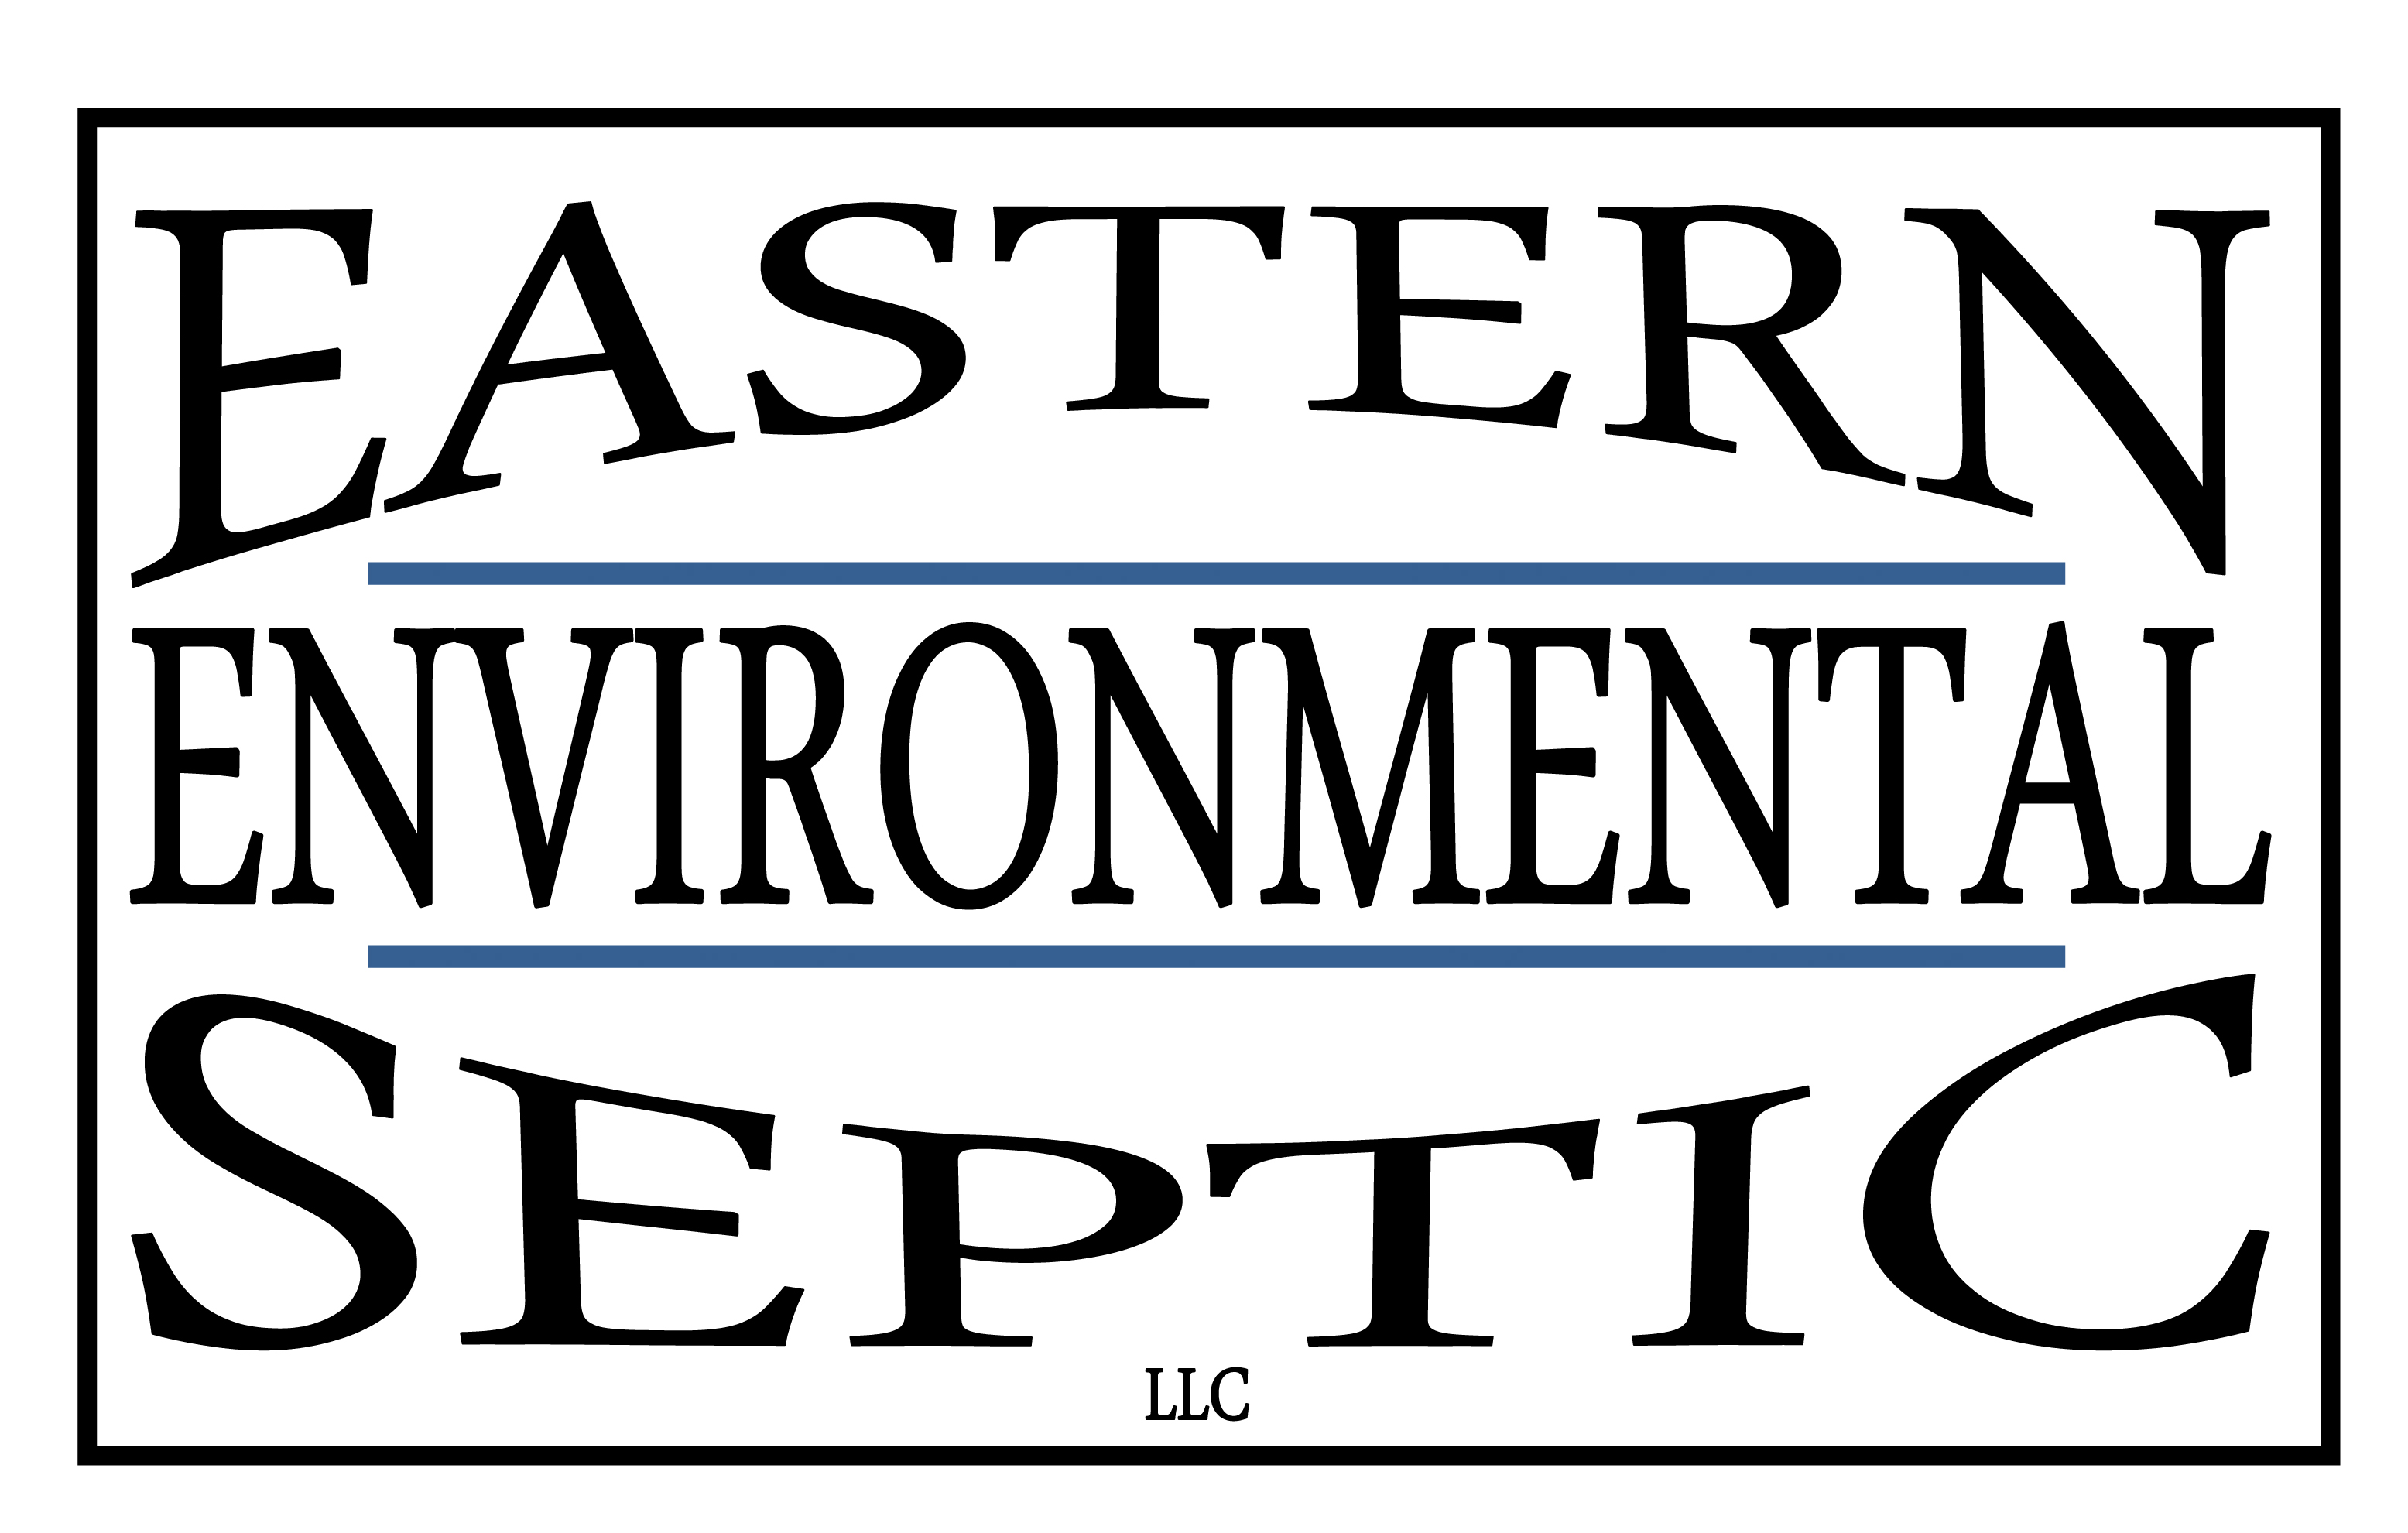 Eastern Environmental Septic LLC